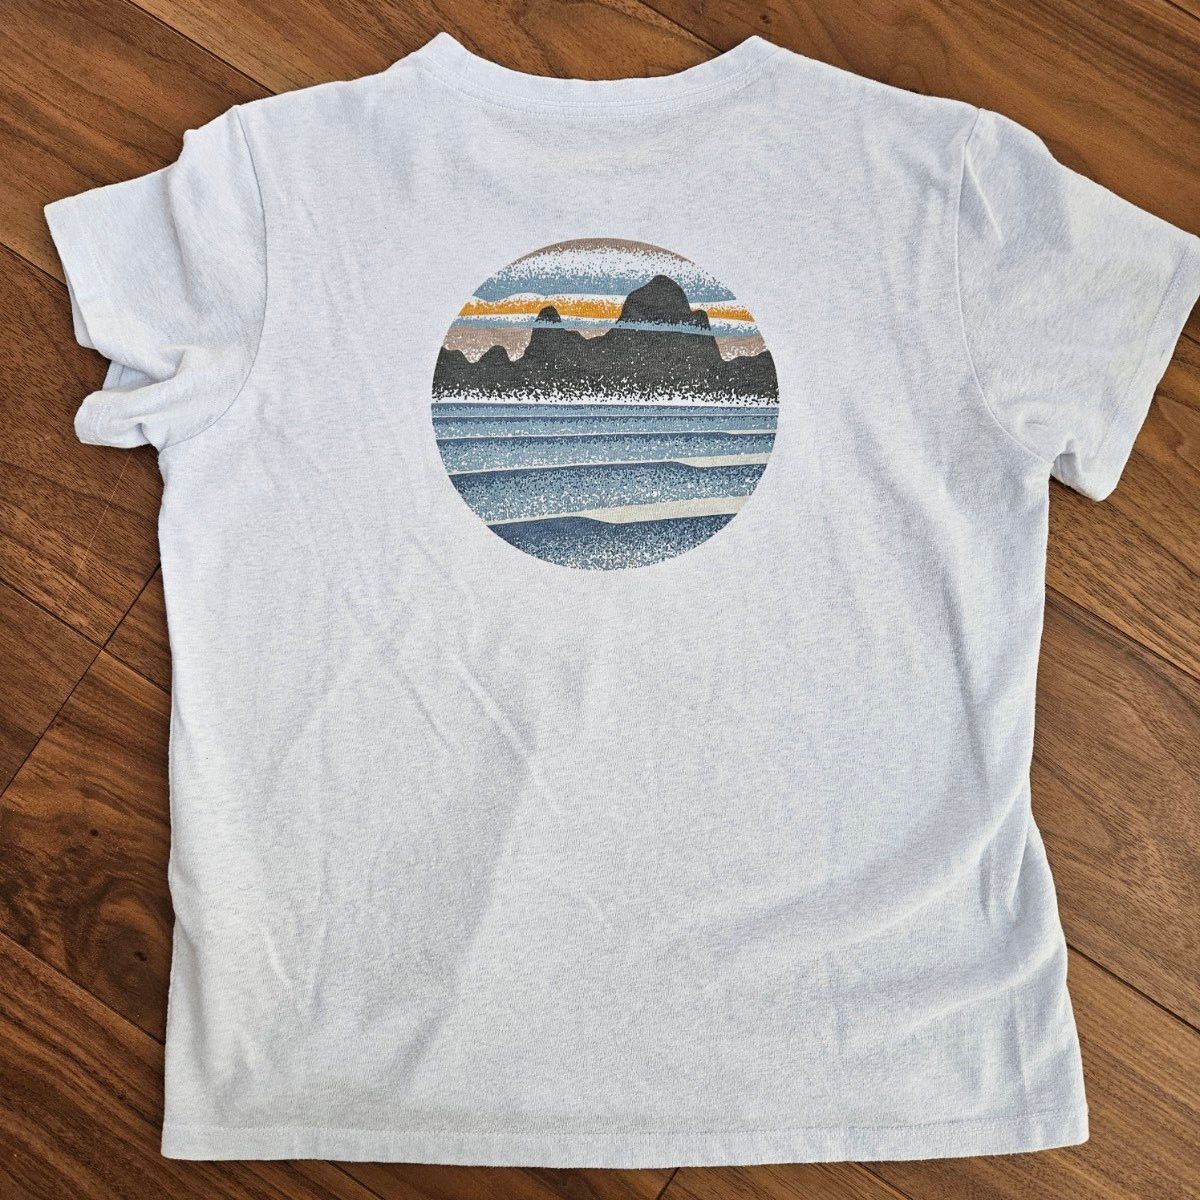 patagonia スカイラインステンシルレスポンシビリティTシャツ Mサイズ